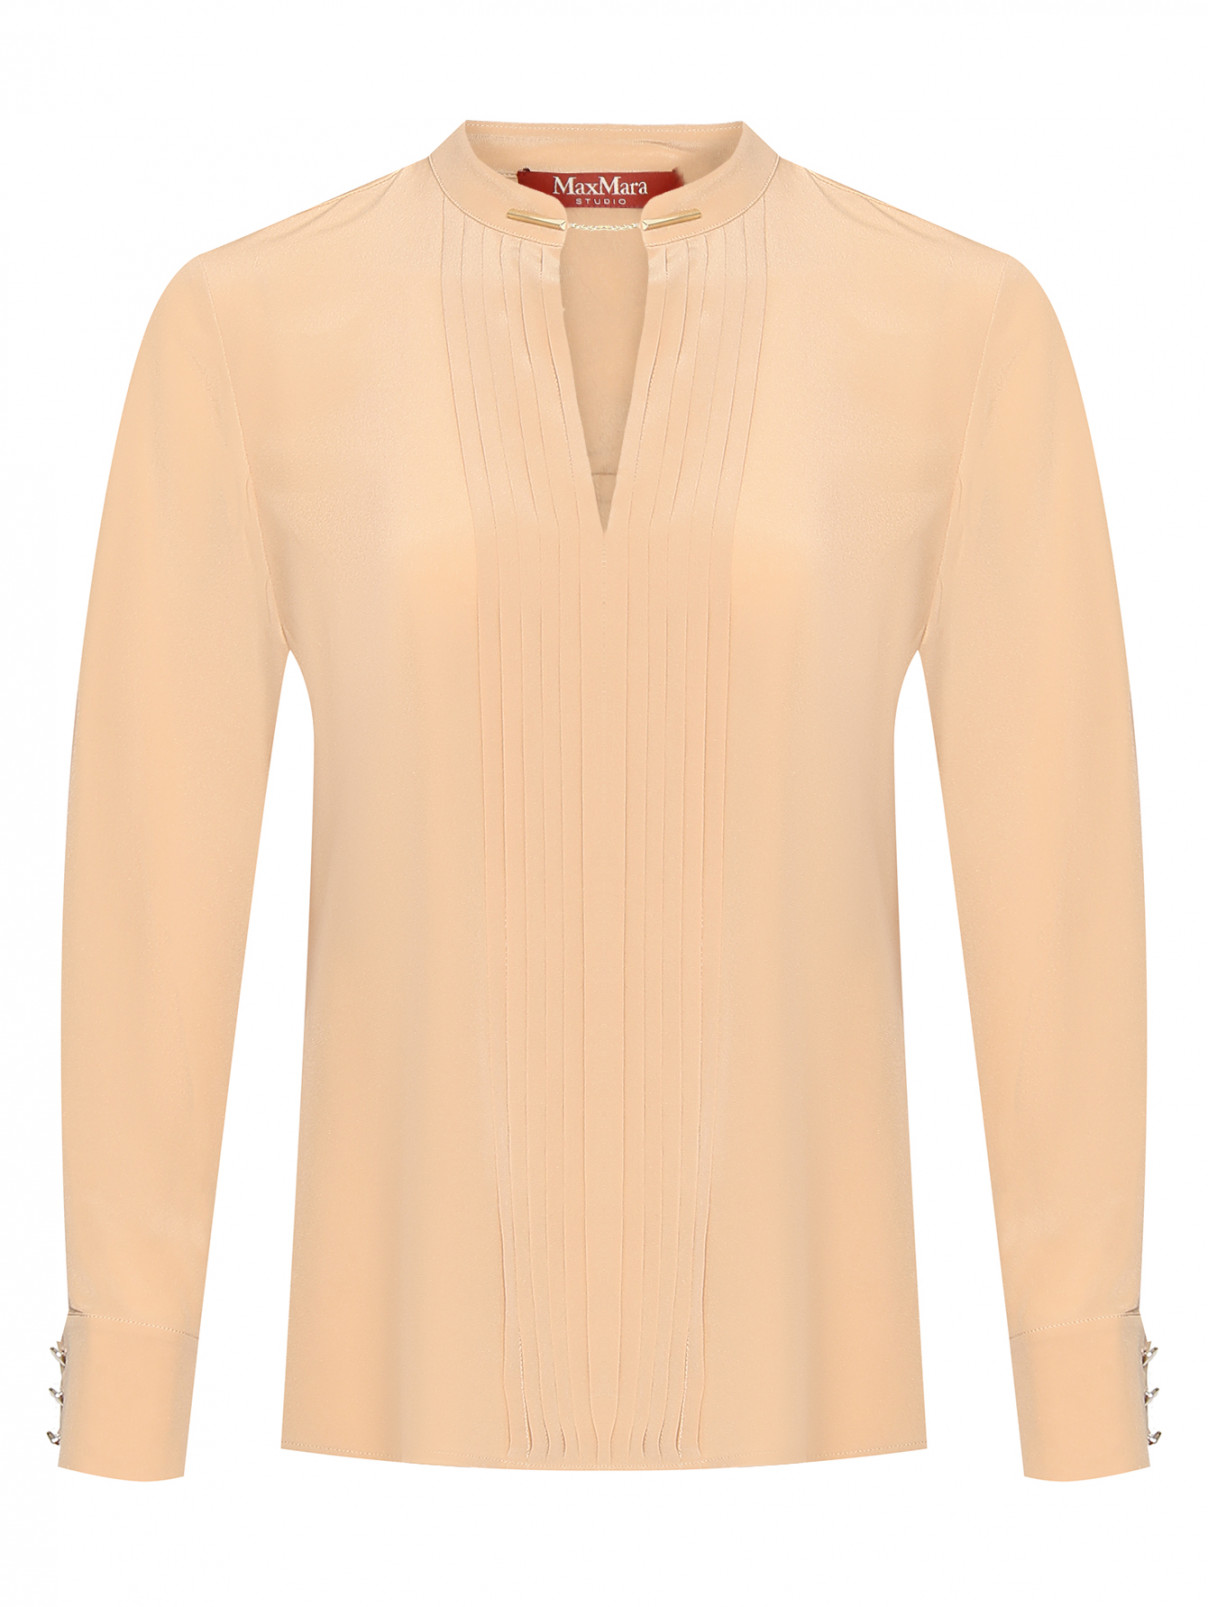 Блуза из шелка с золотистой фурнитурой Max Mara  –  Общий вид  – Цвет:  Бежевый